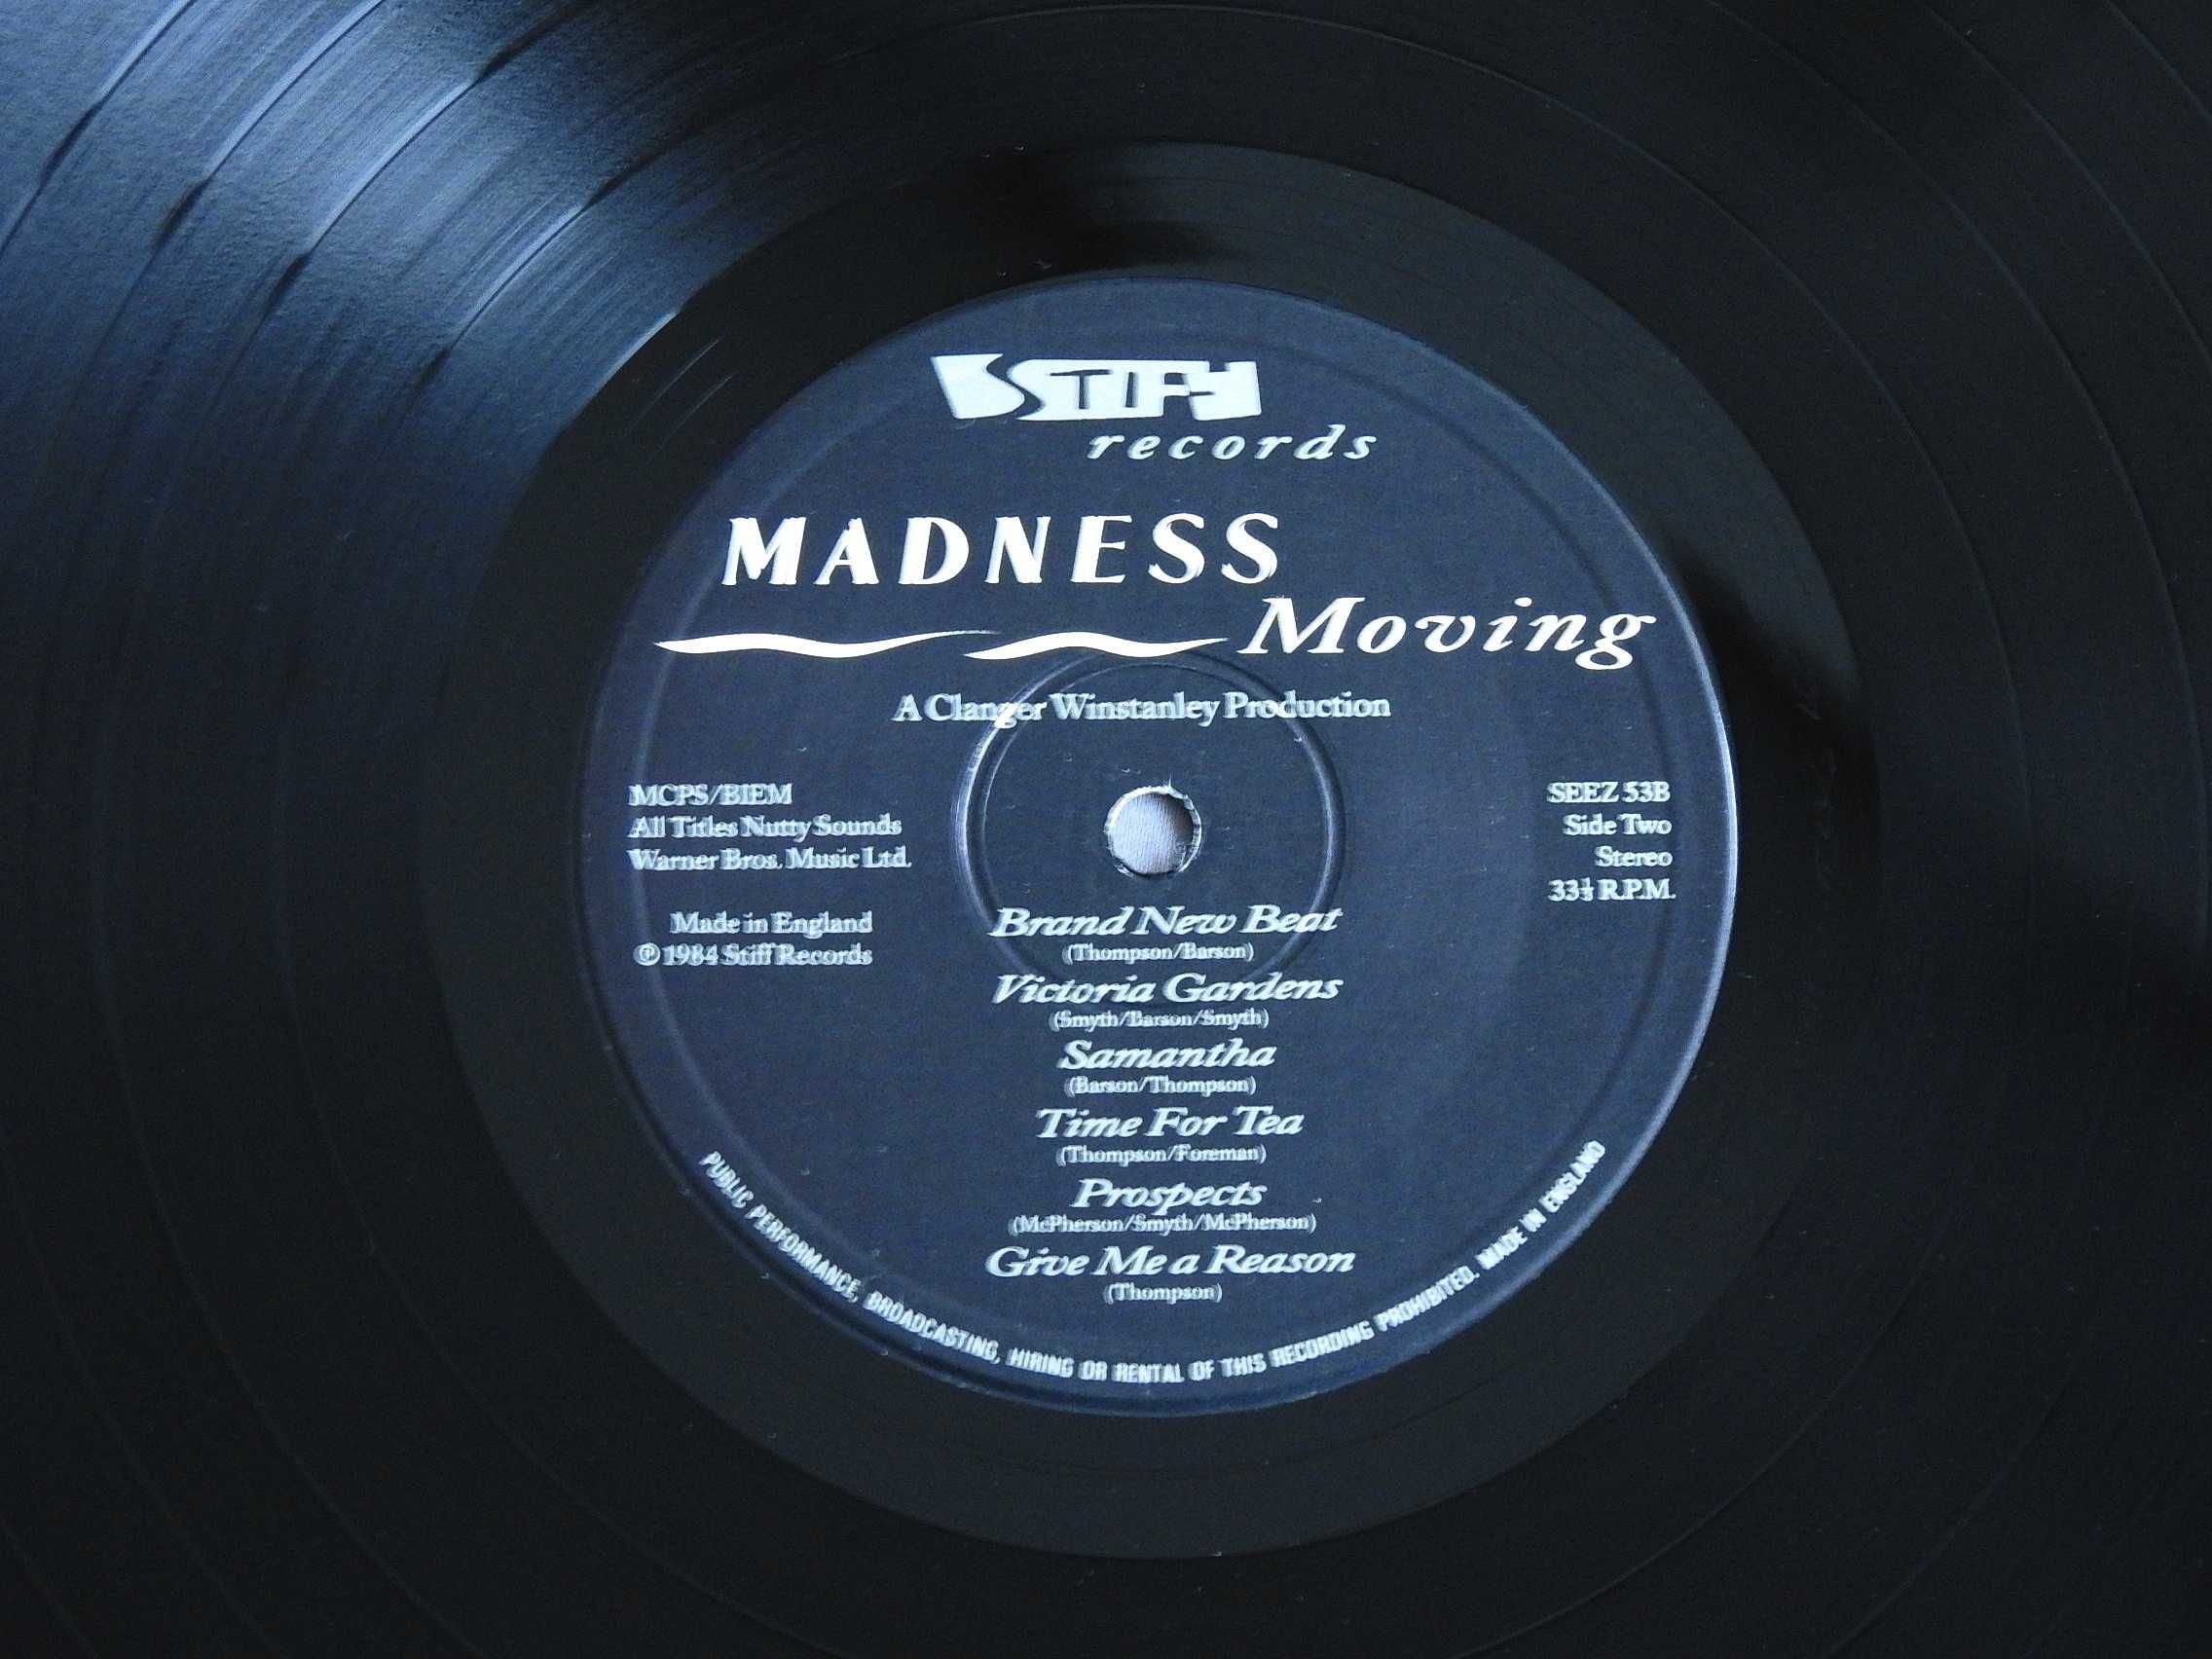 Madness Keep Moving LP 1984 UK пластинка NM / EX Британия 1st press